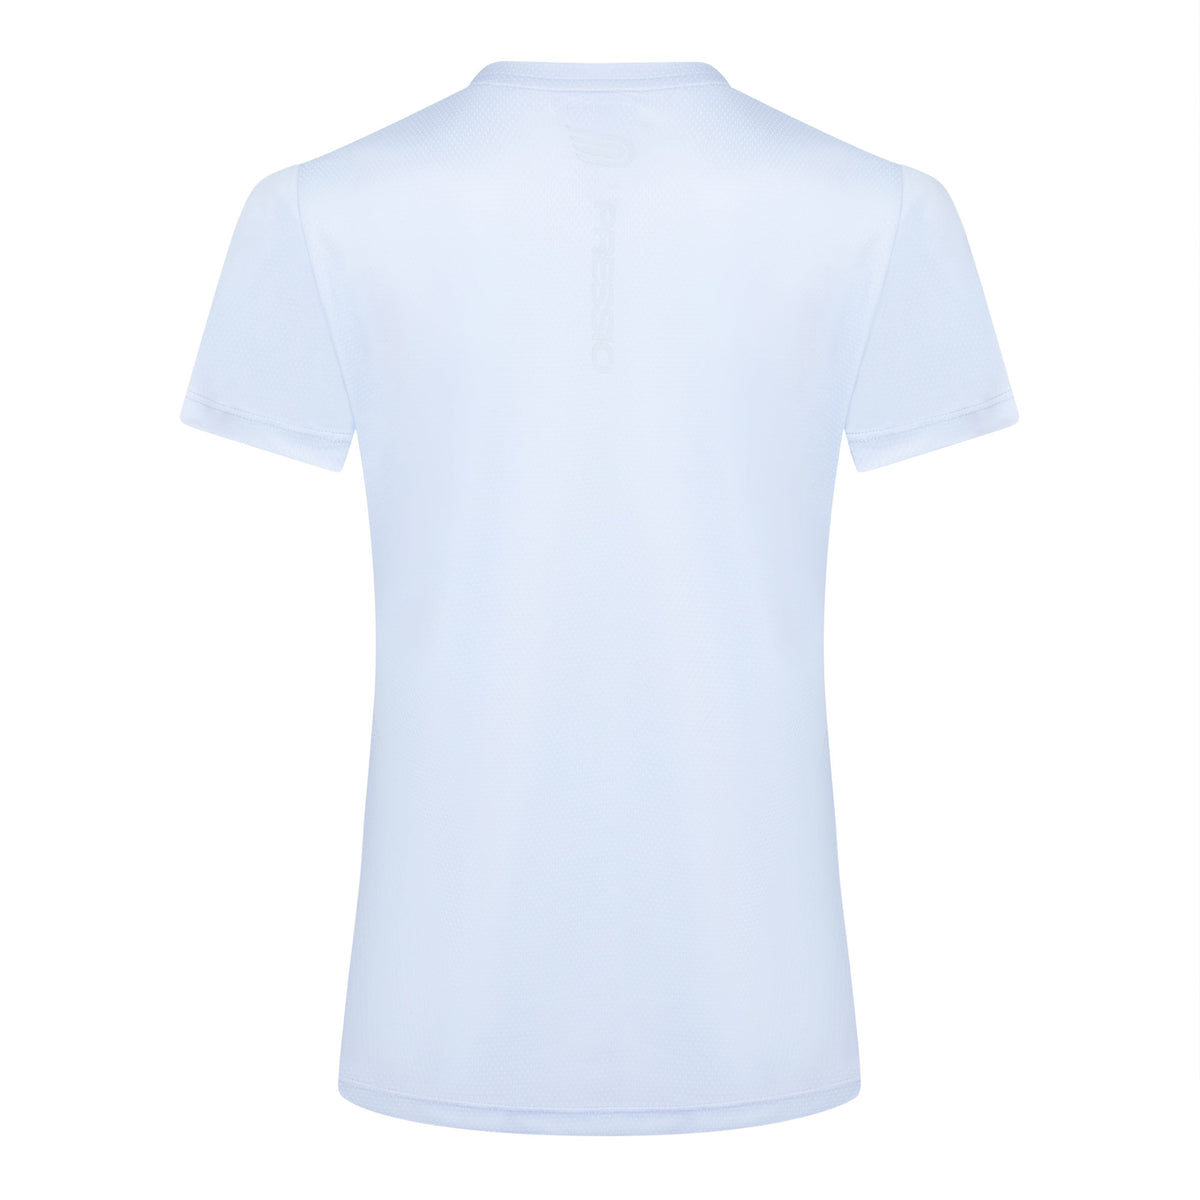 PRESSIO Hāpai Kortermet T-skjorte - Lys blå